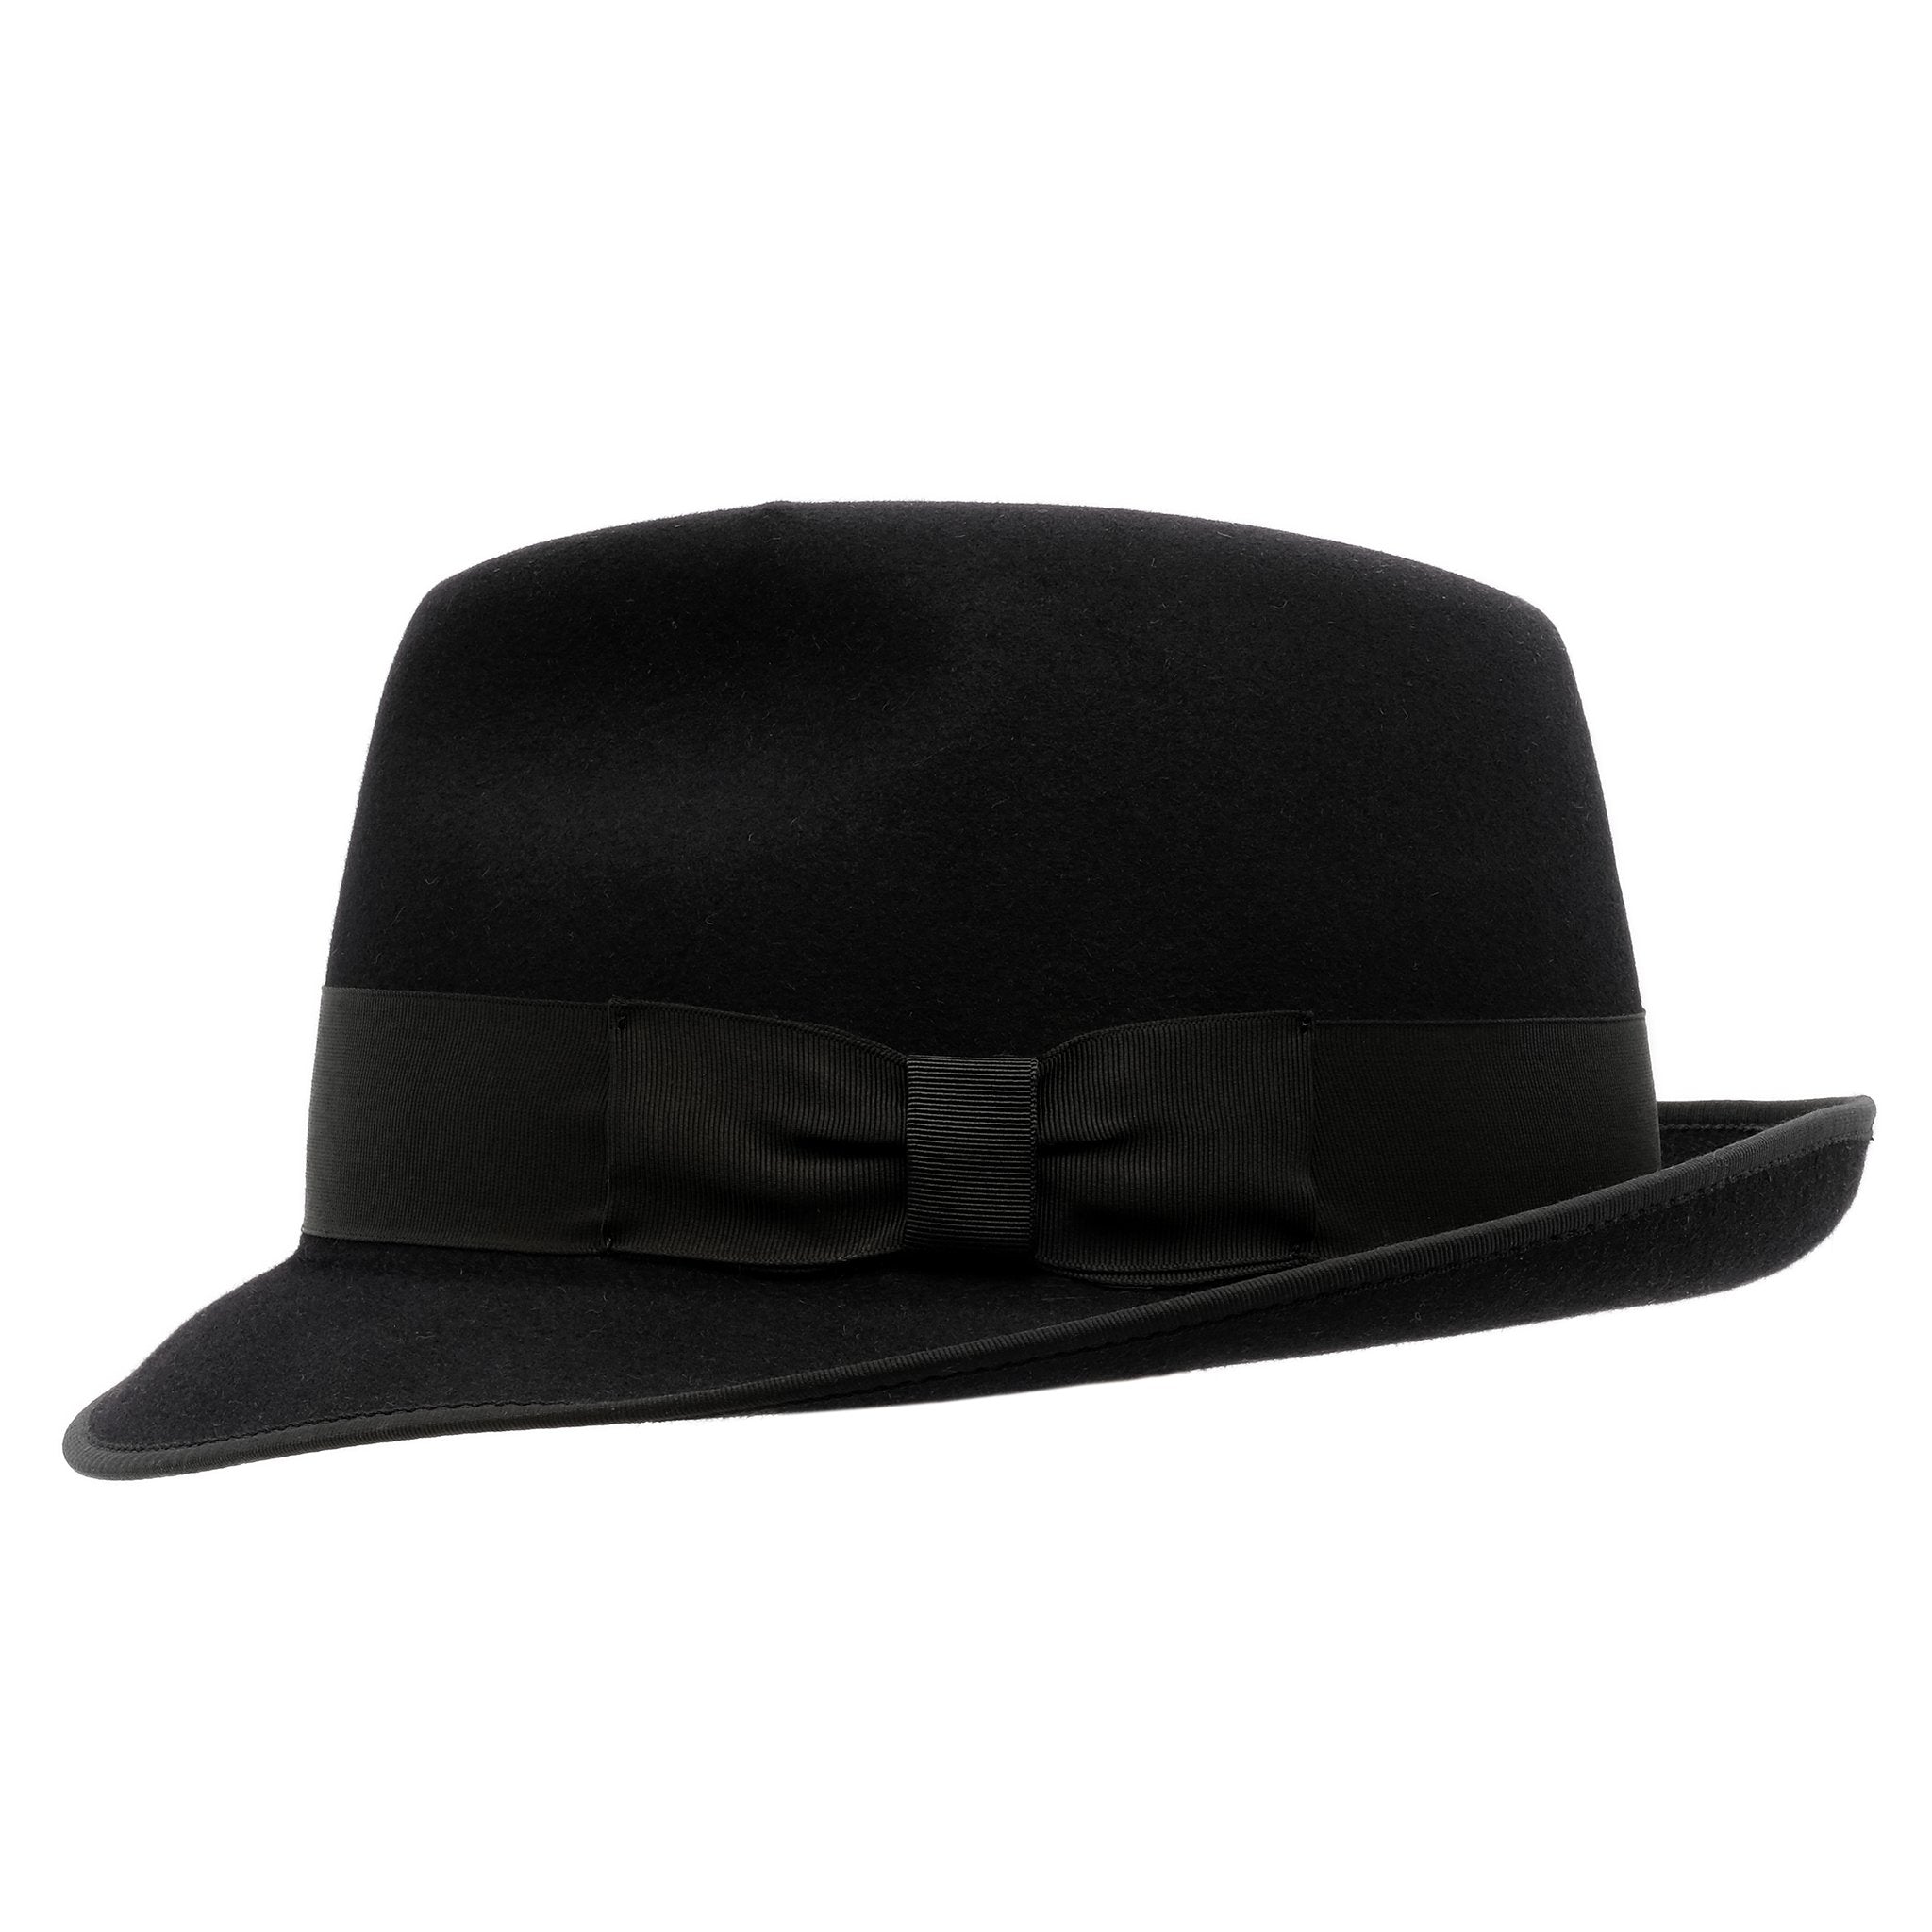 Side view of the Akubra Hampton hat in black